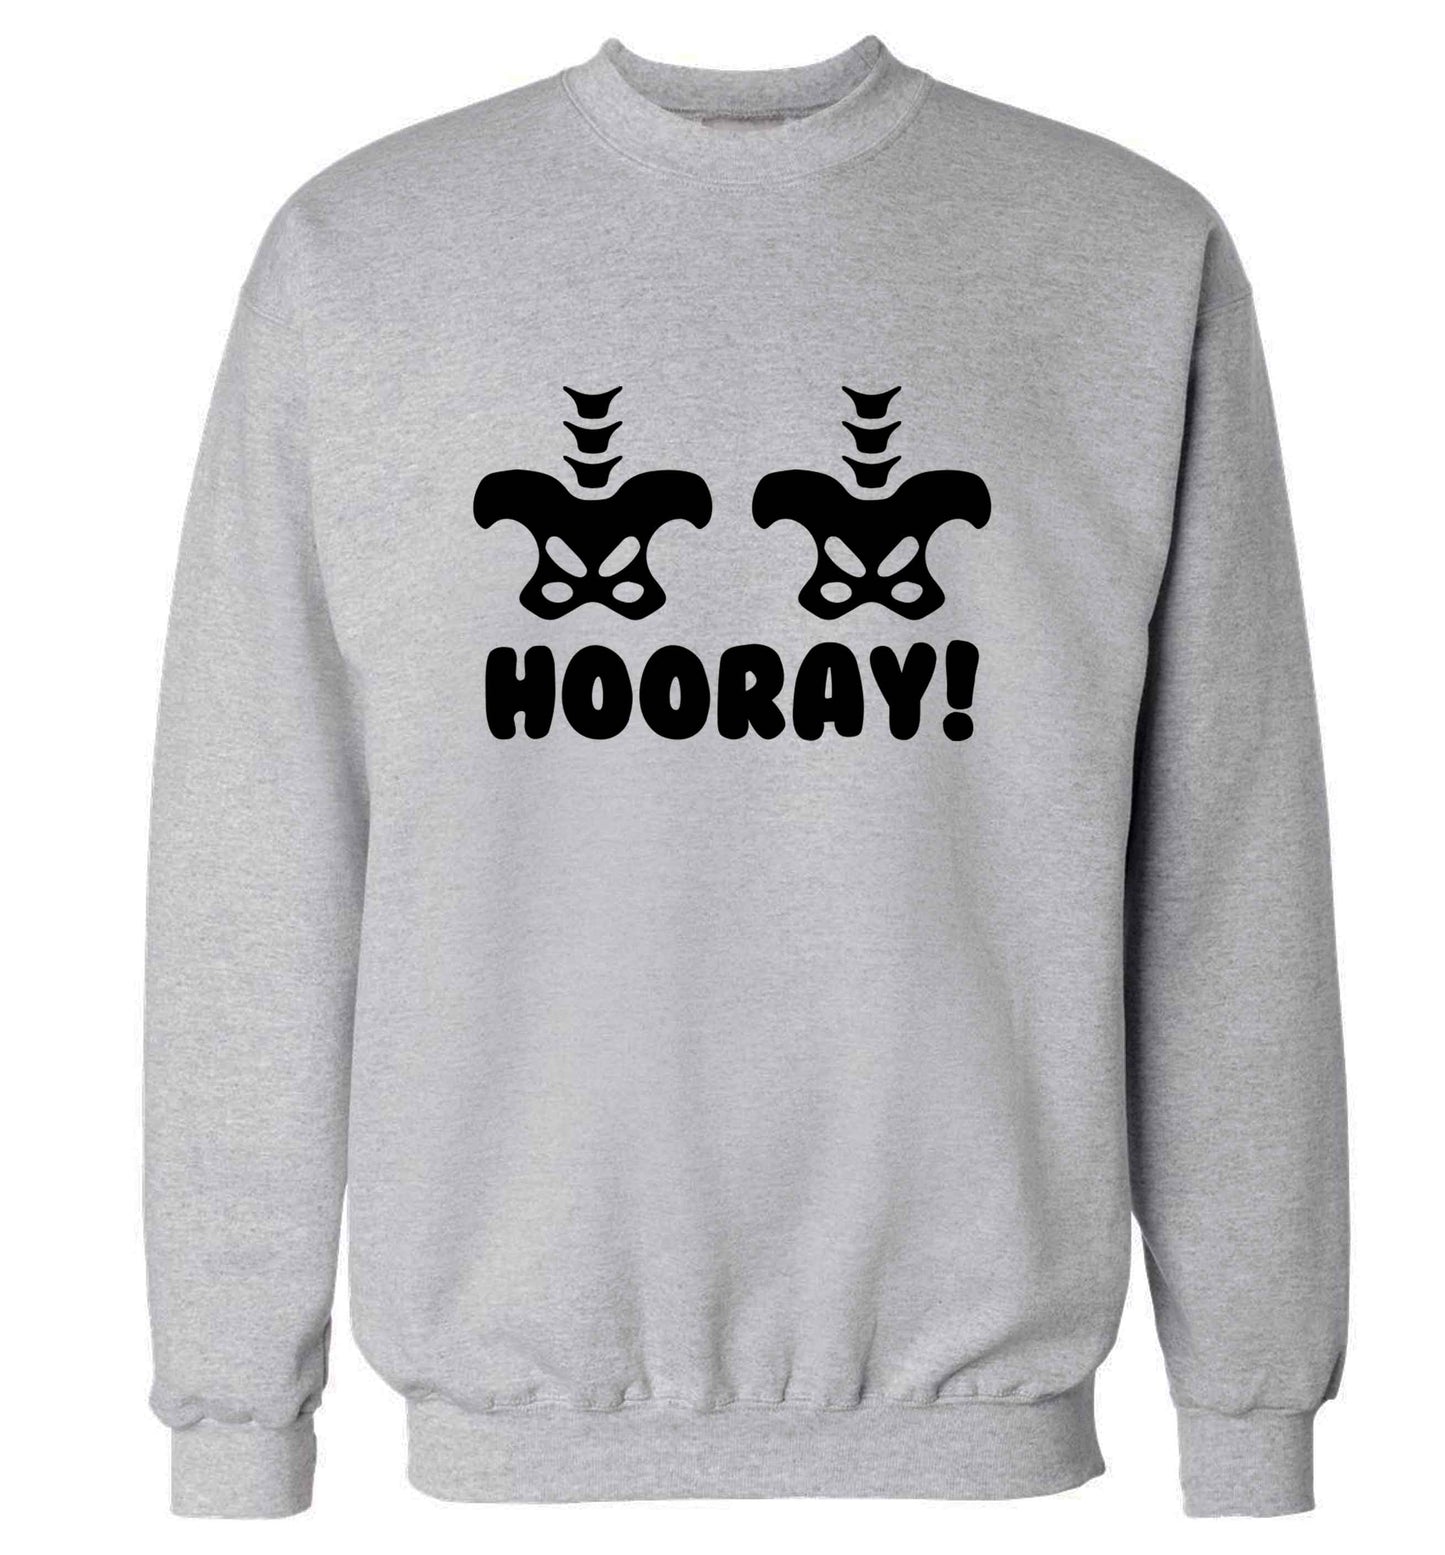 Hip Hip Hooray! adult's unisex grey sweater 2XL